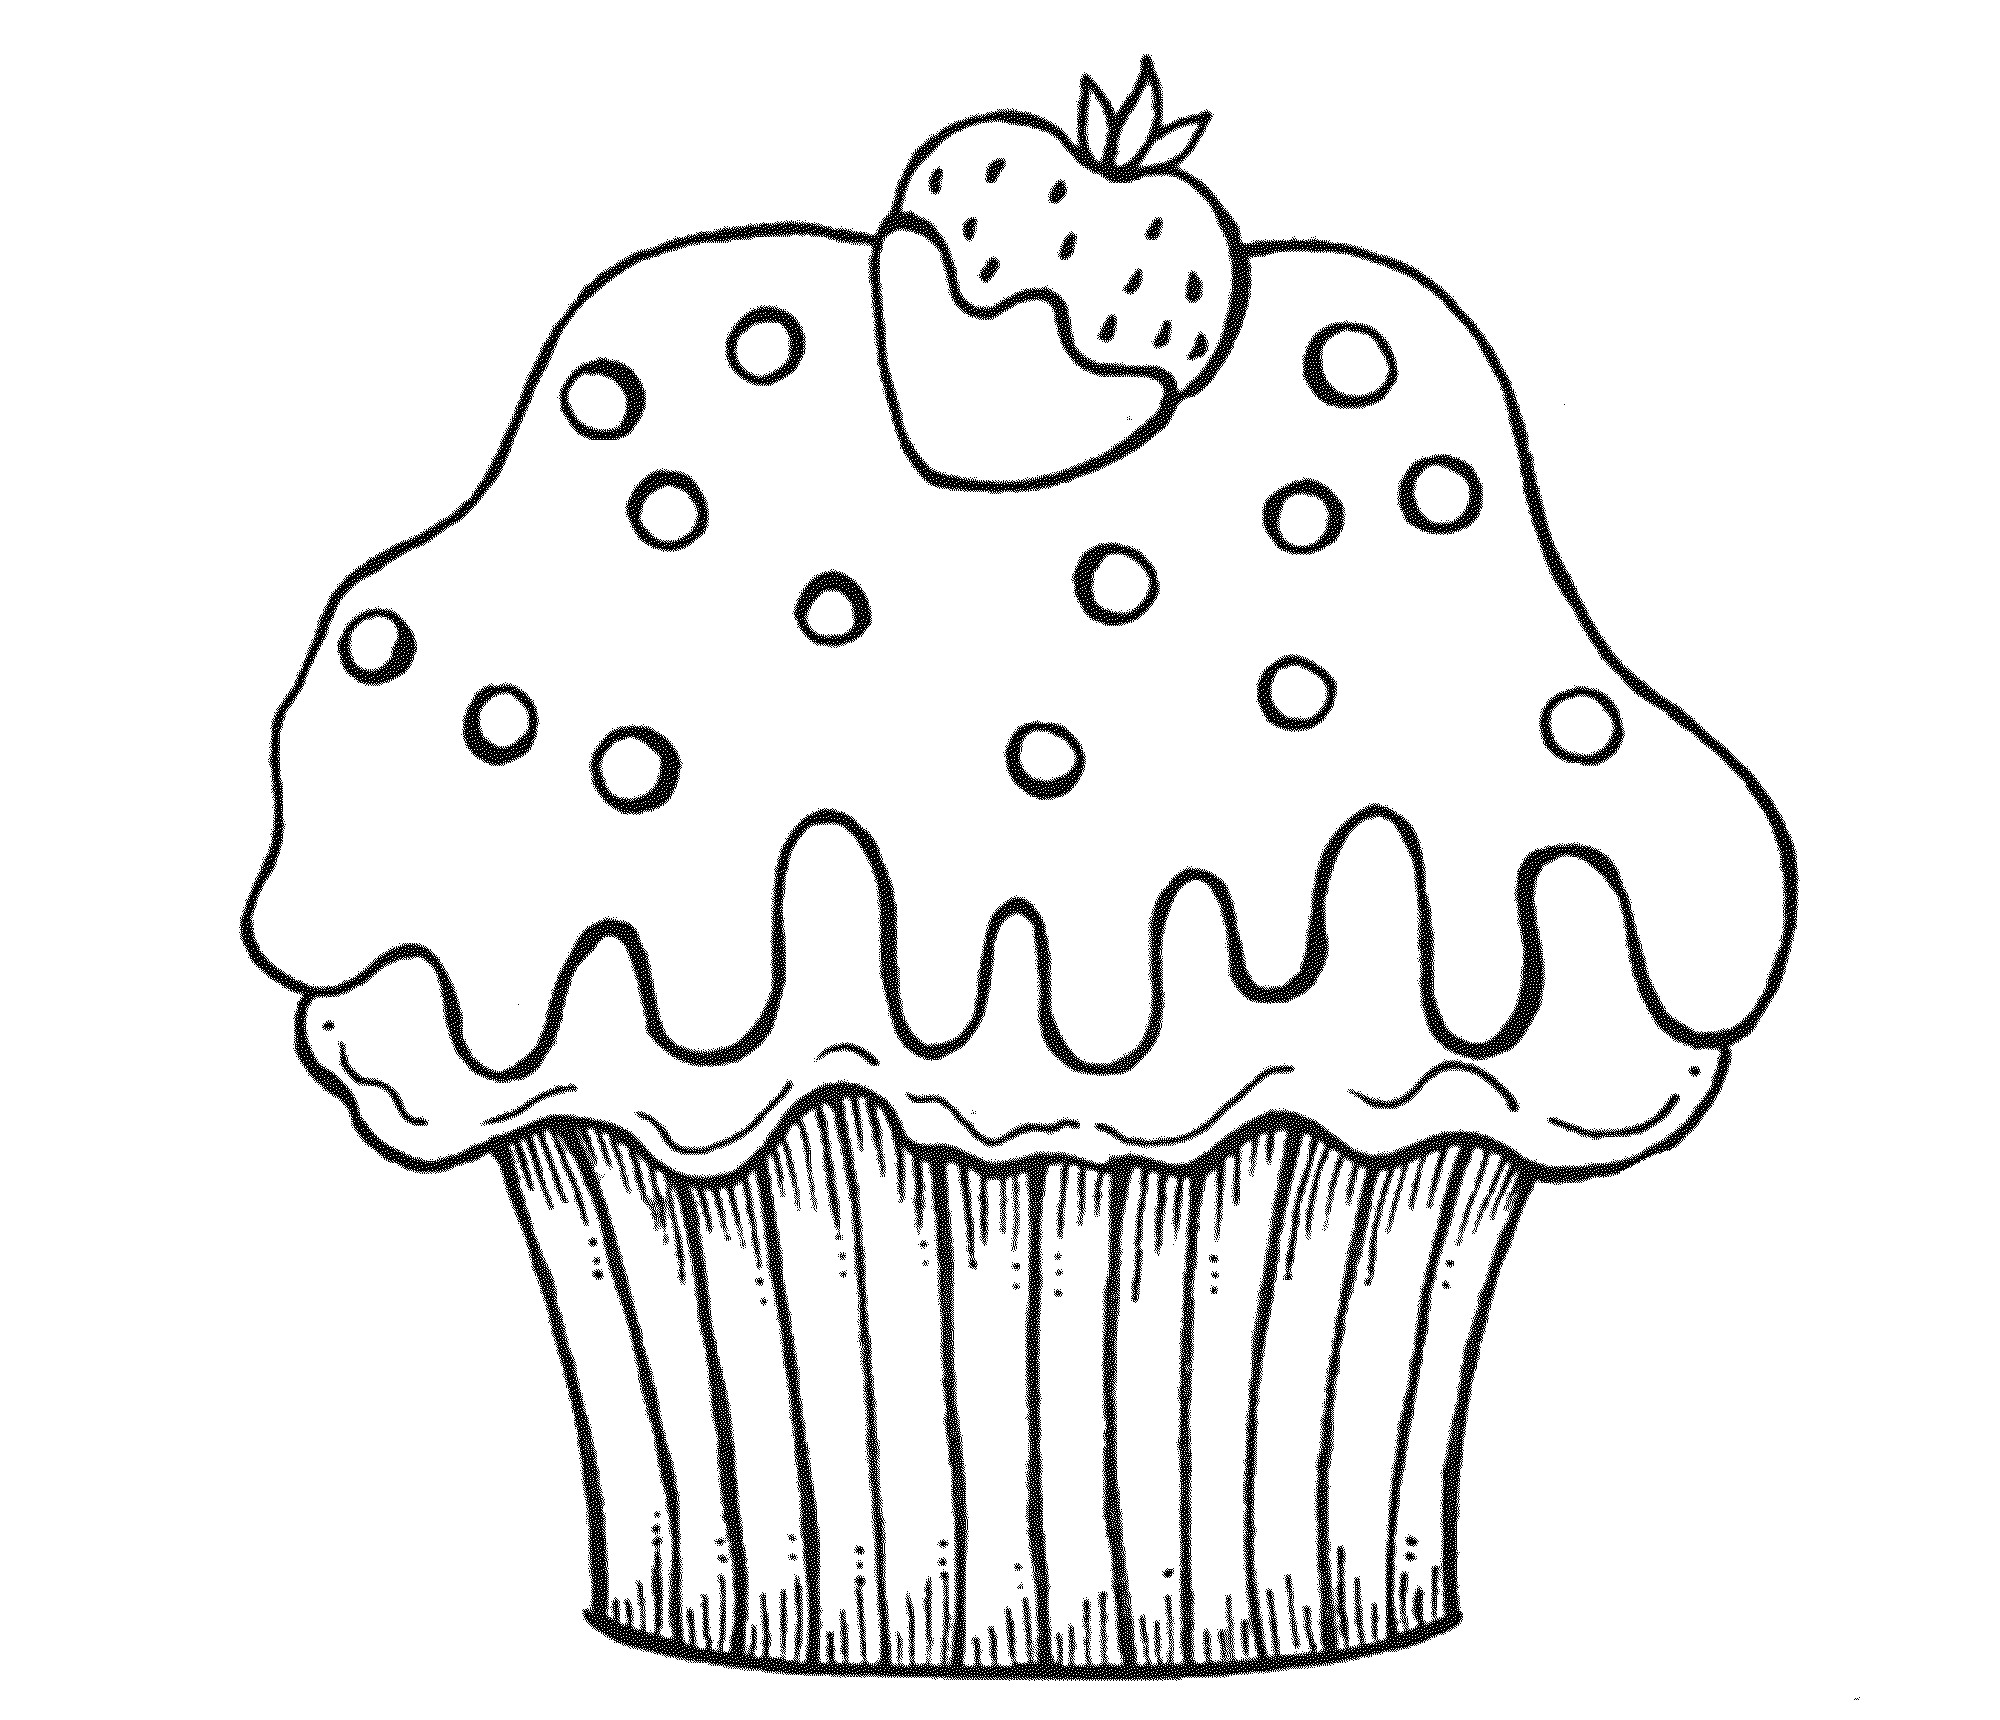 Cute Cupcake Coloring Pages at GetColorings.com | Free printable